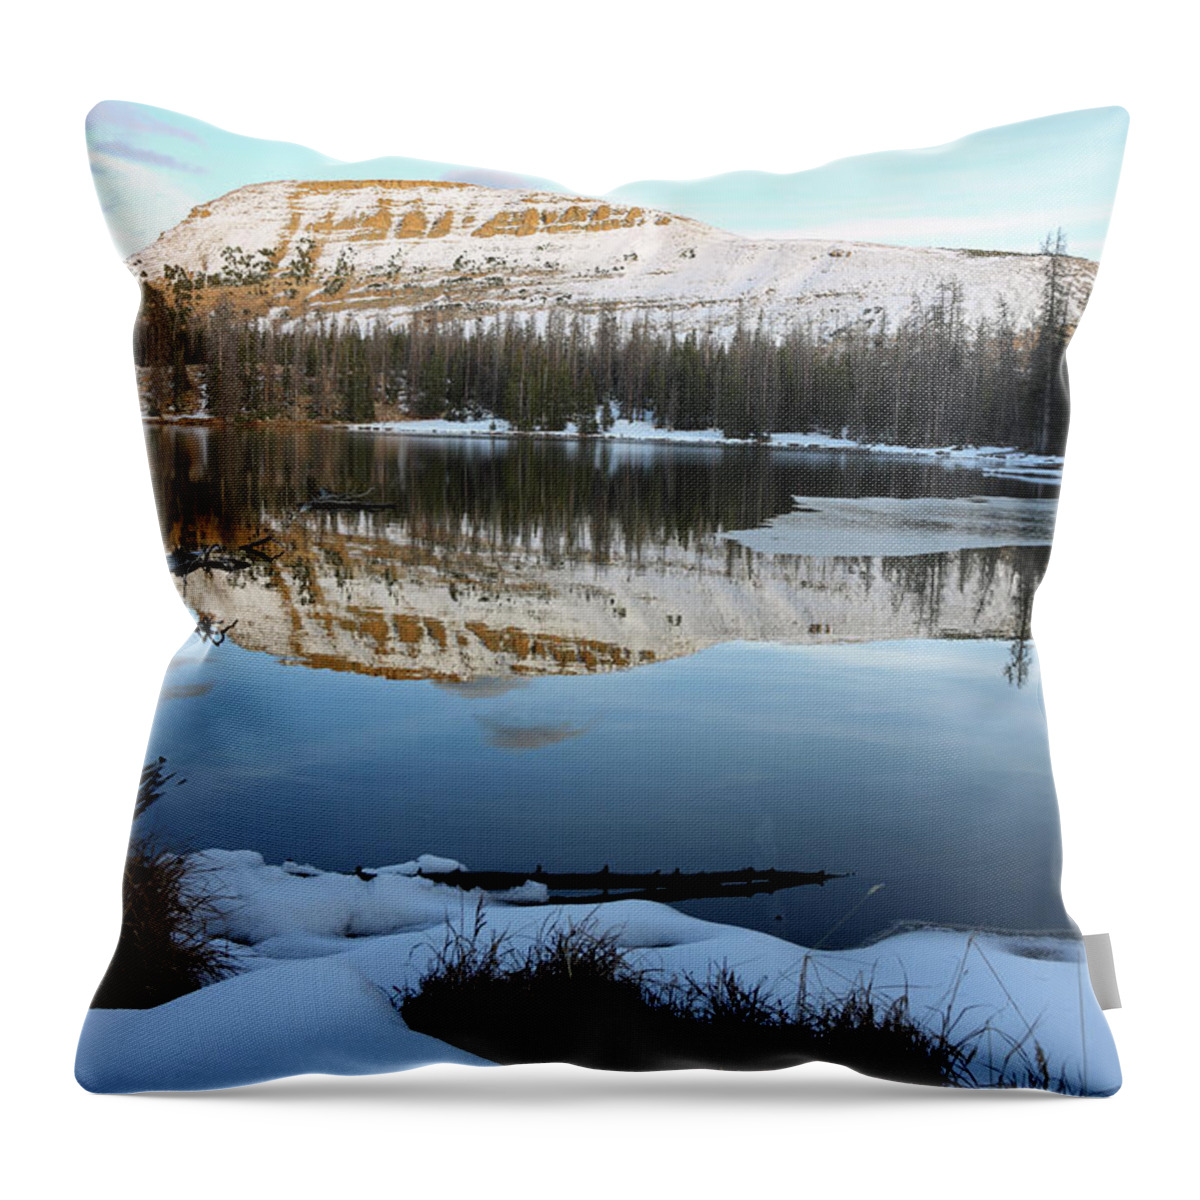 Utah Throw Pillow featuring the photograph Bald Mountain Sunset on Clegg Lake - Uinta Mountains, Utah by Brett Pelletier